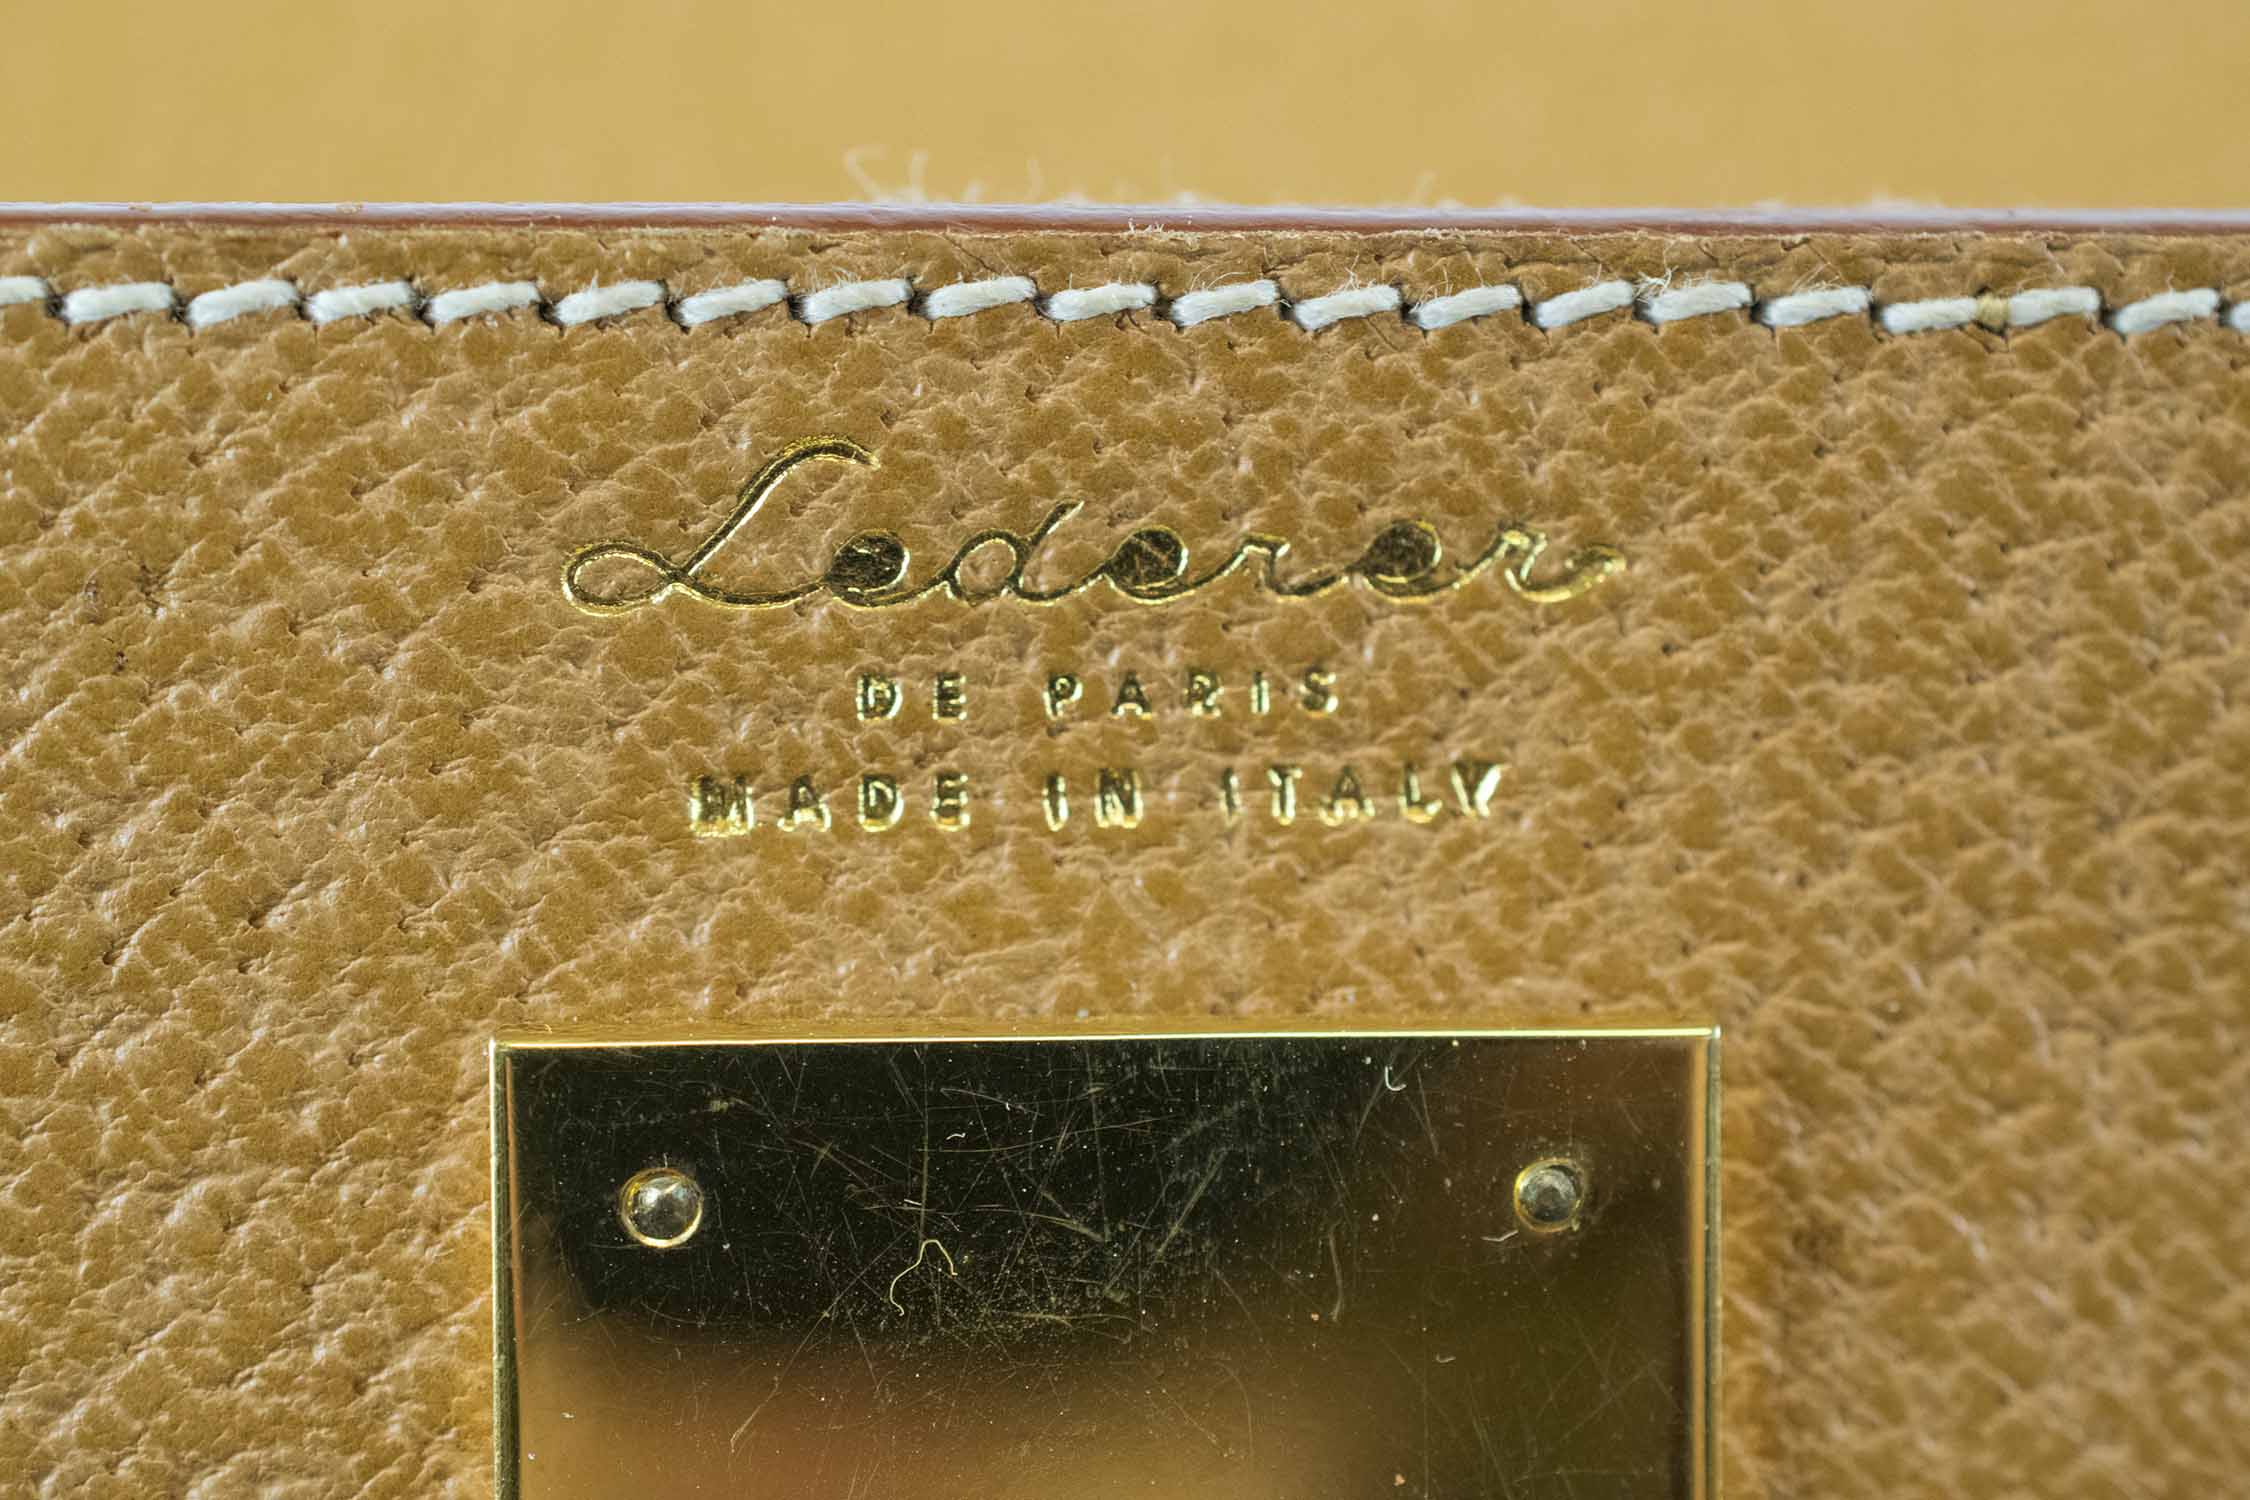 Vintage Mustard Leather Bag Papillon Paris Handbag Metal 